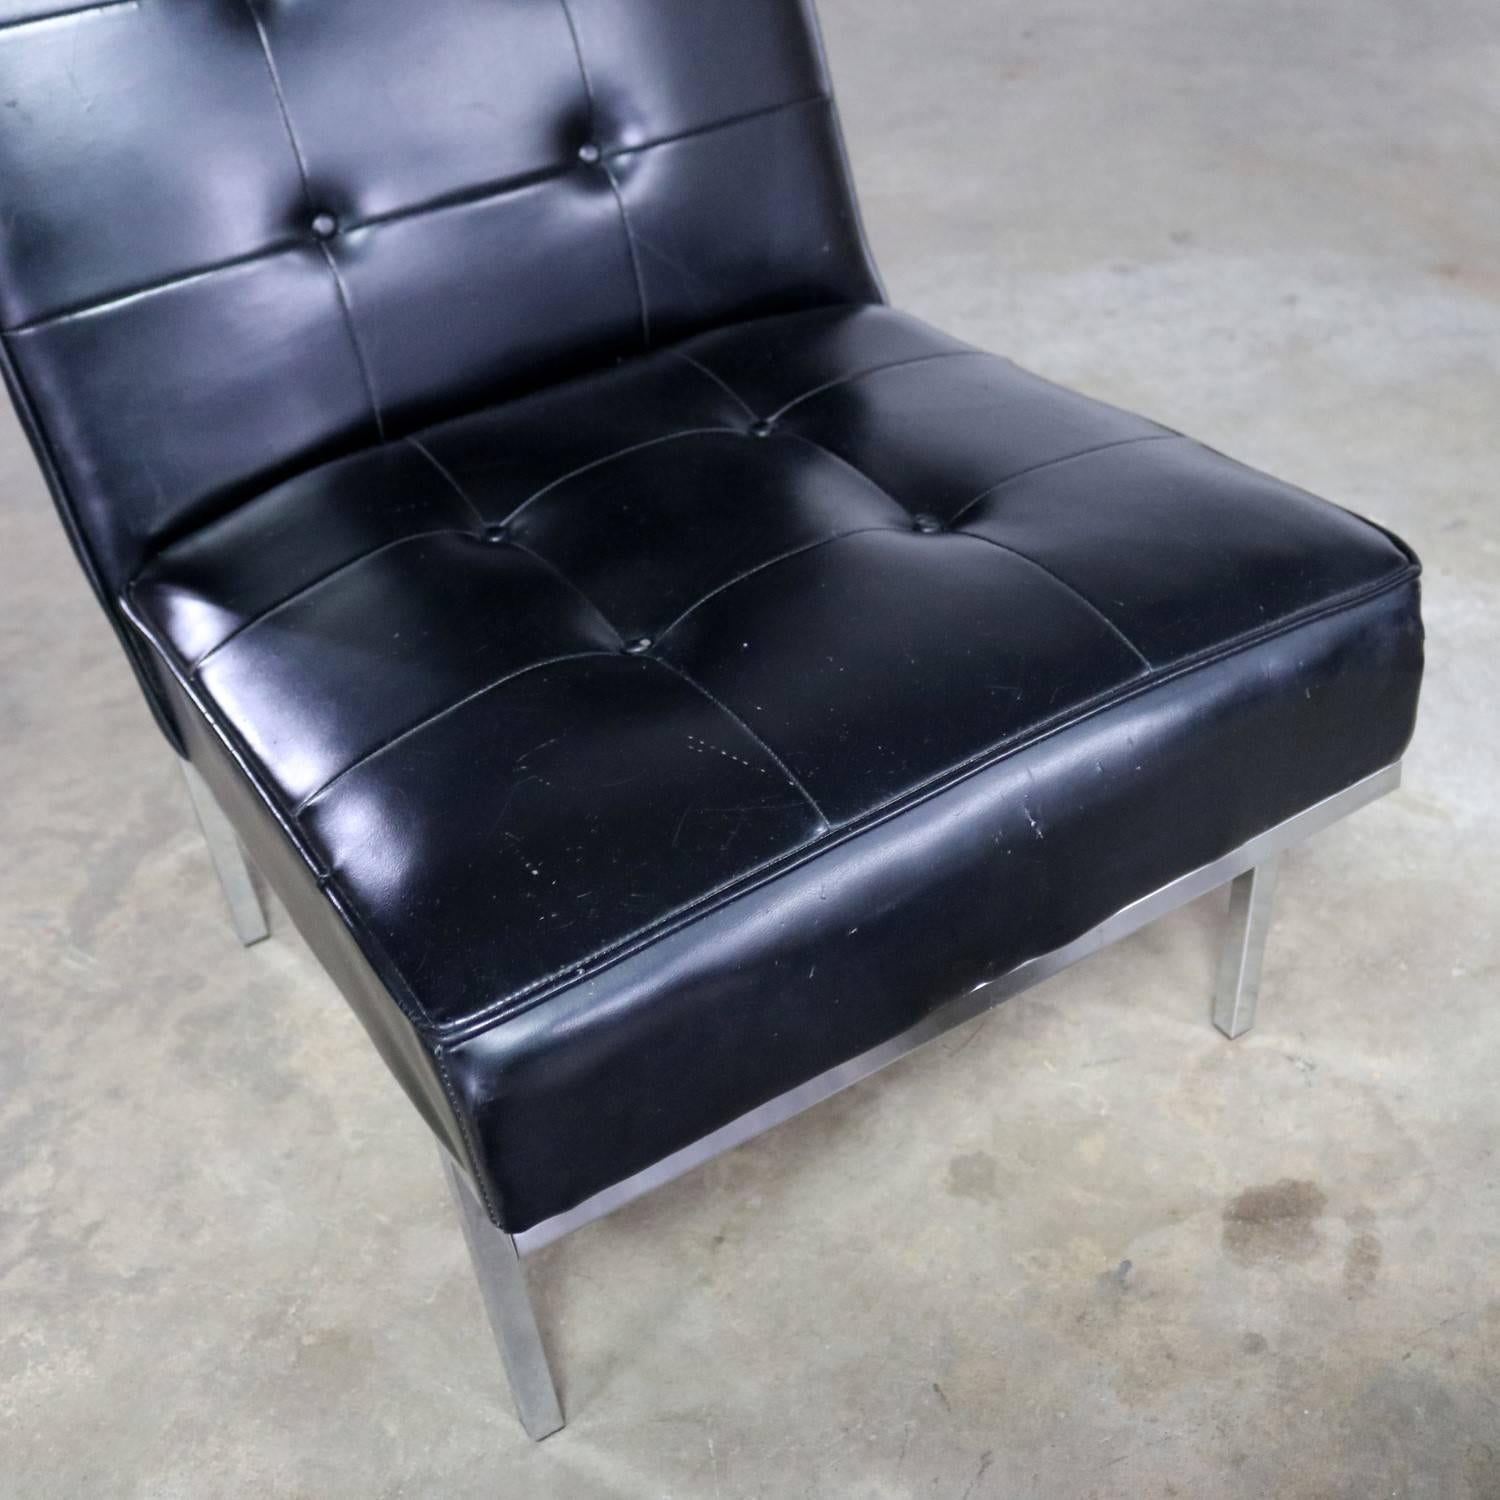 Paoli Chair Co. Black Naugahyde Chrome MCM Slipper Chairs Style Florence Knoll For Sale 2